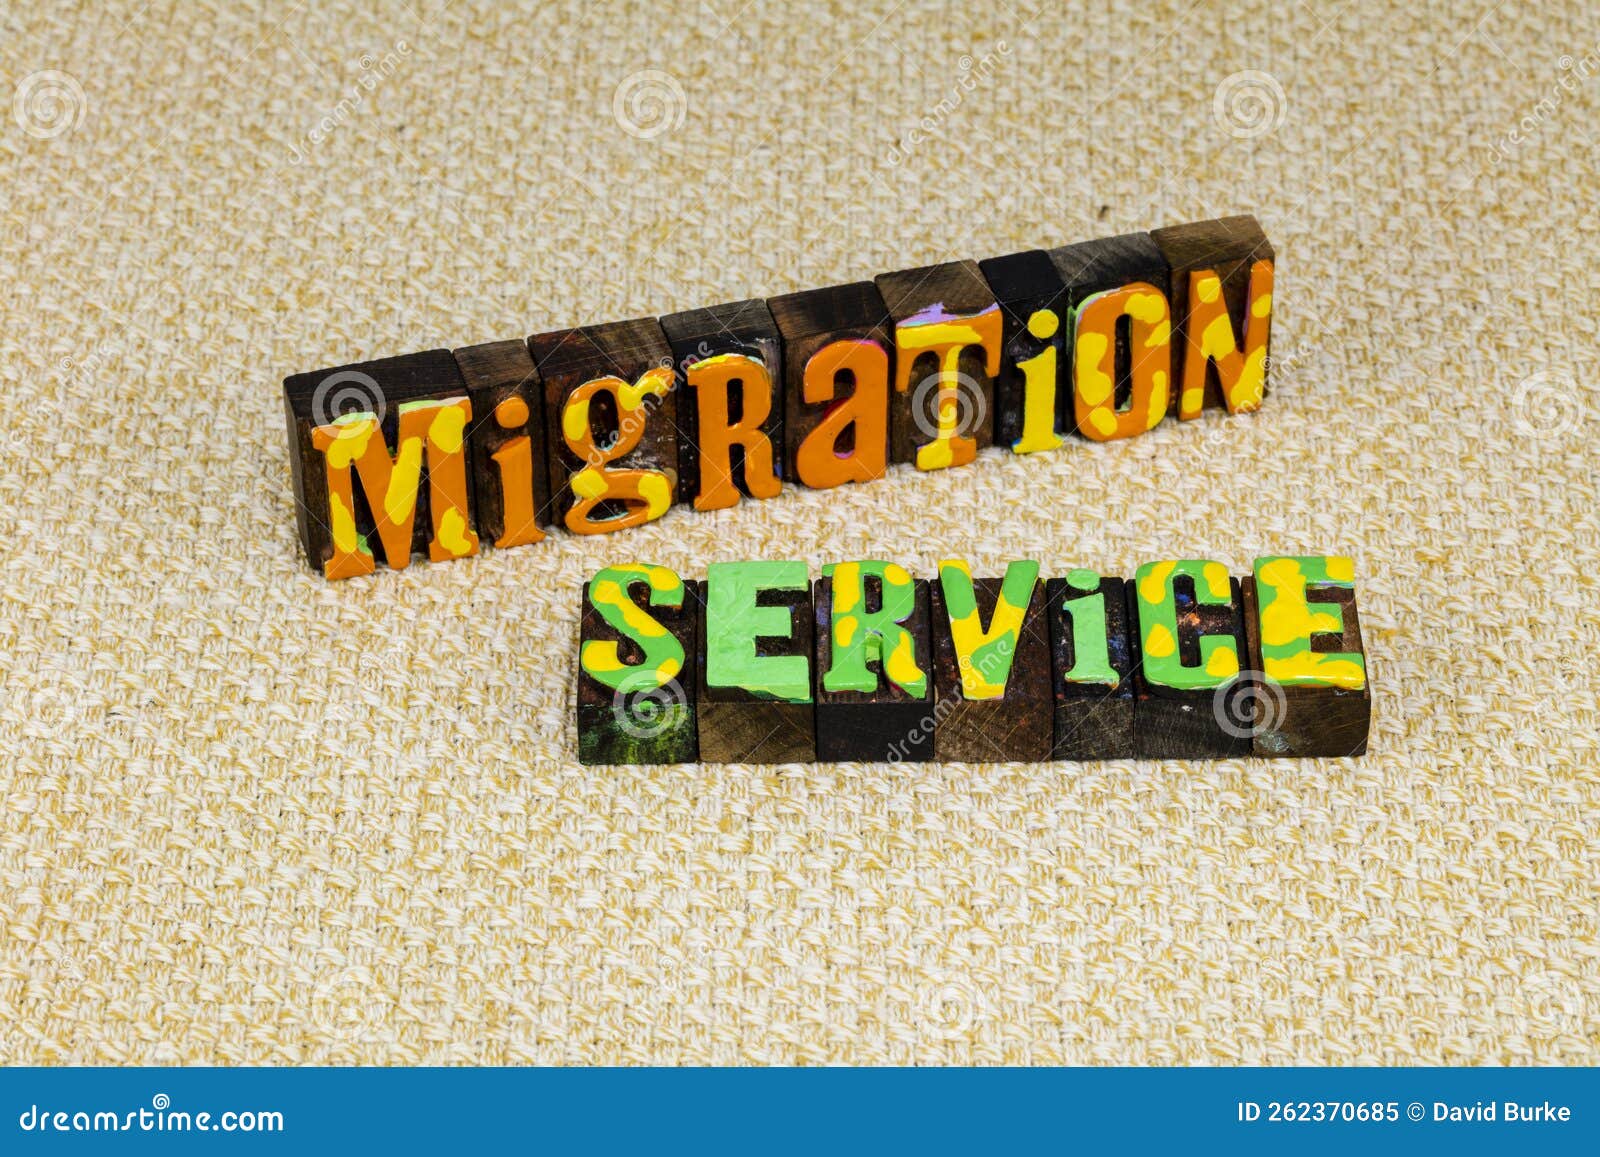 migration service application legal migration immigration foreign migrate